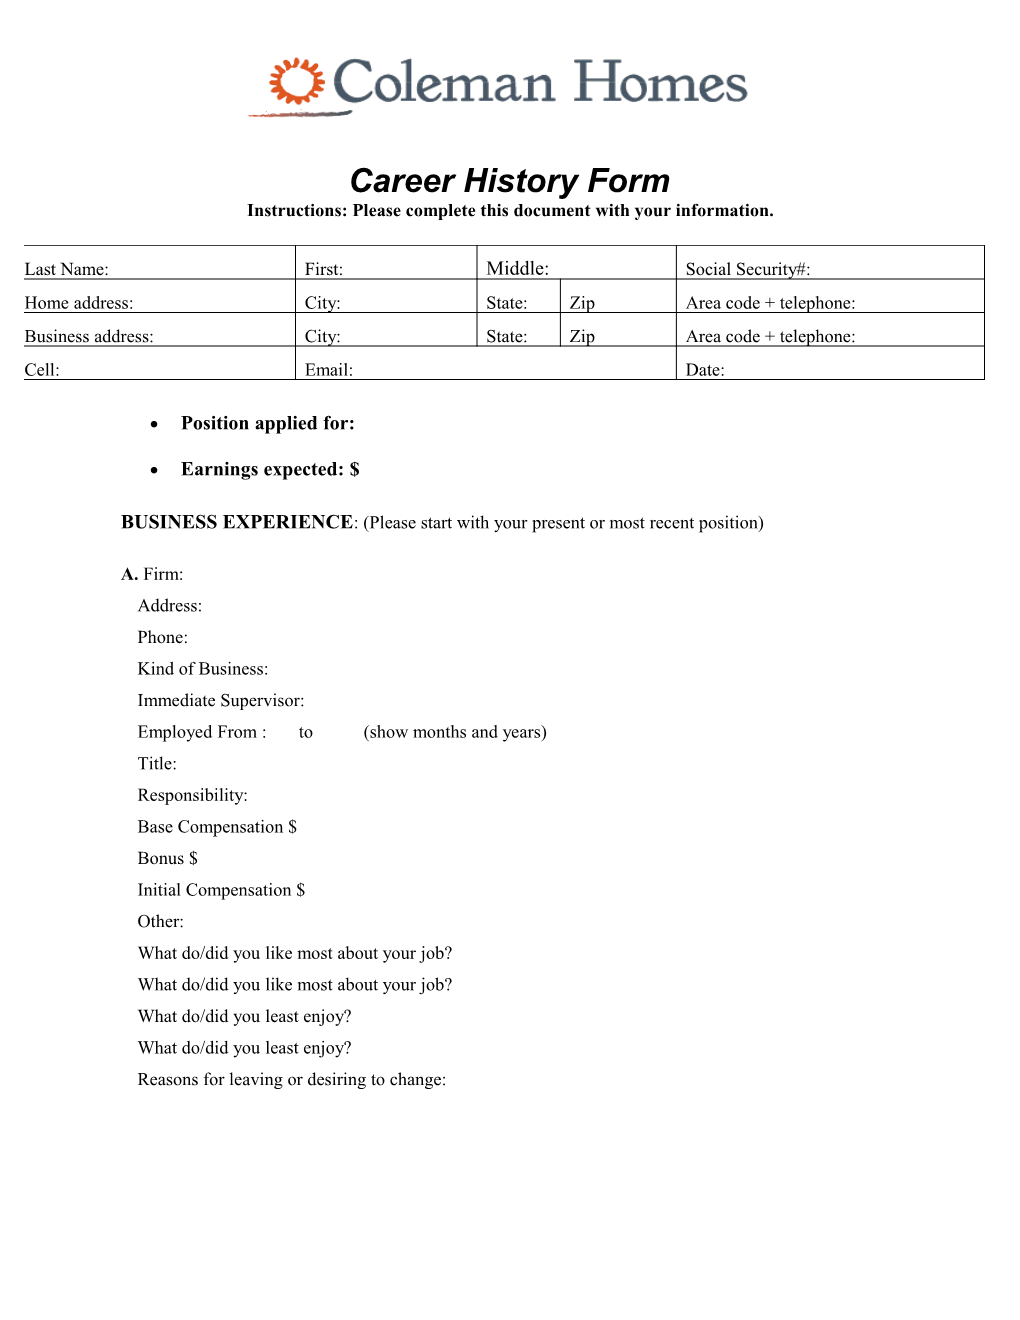 Career History Form